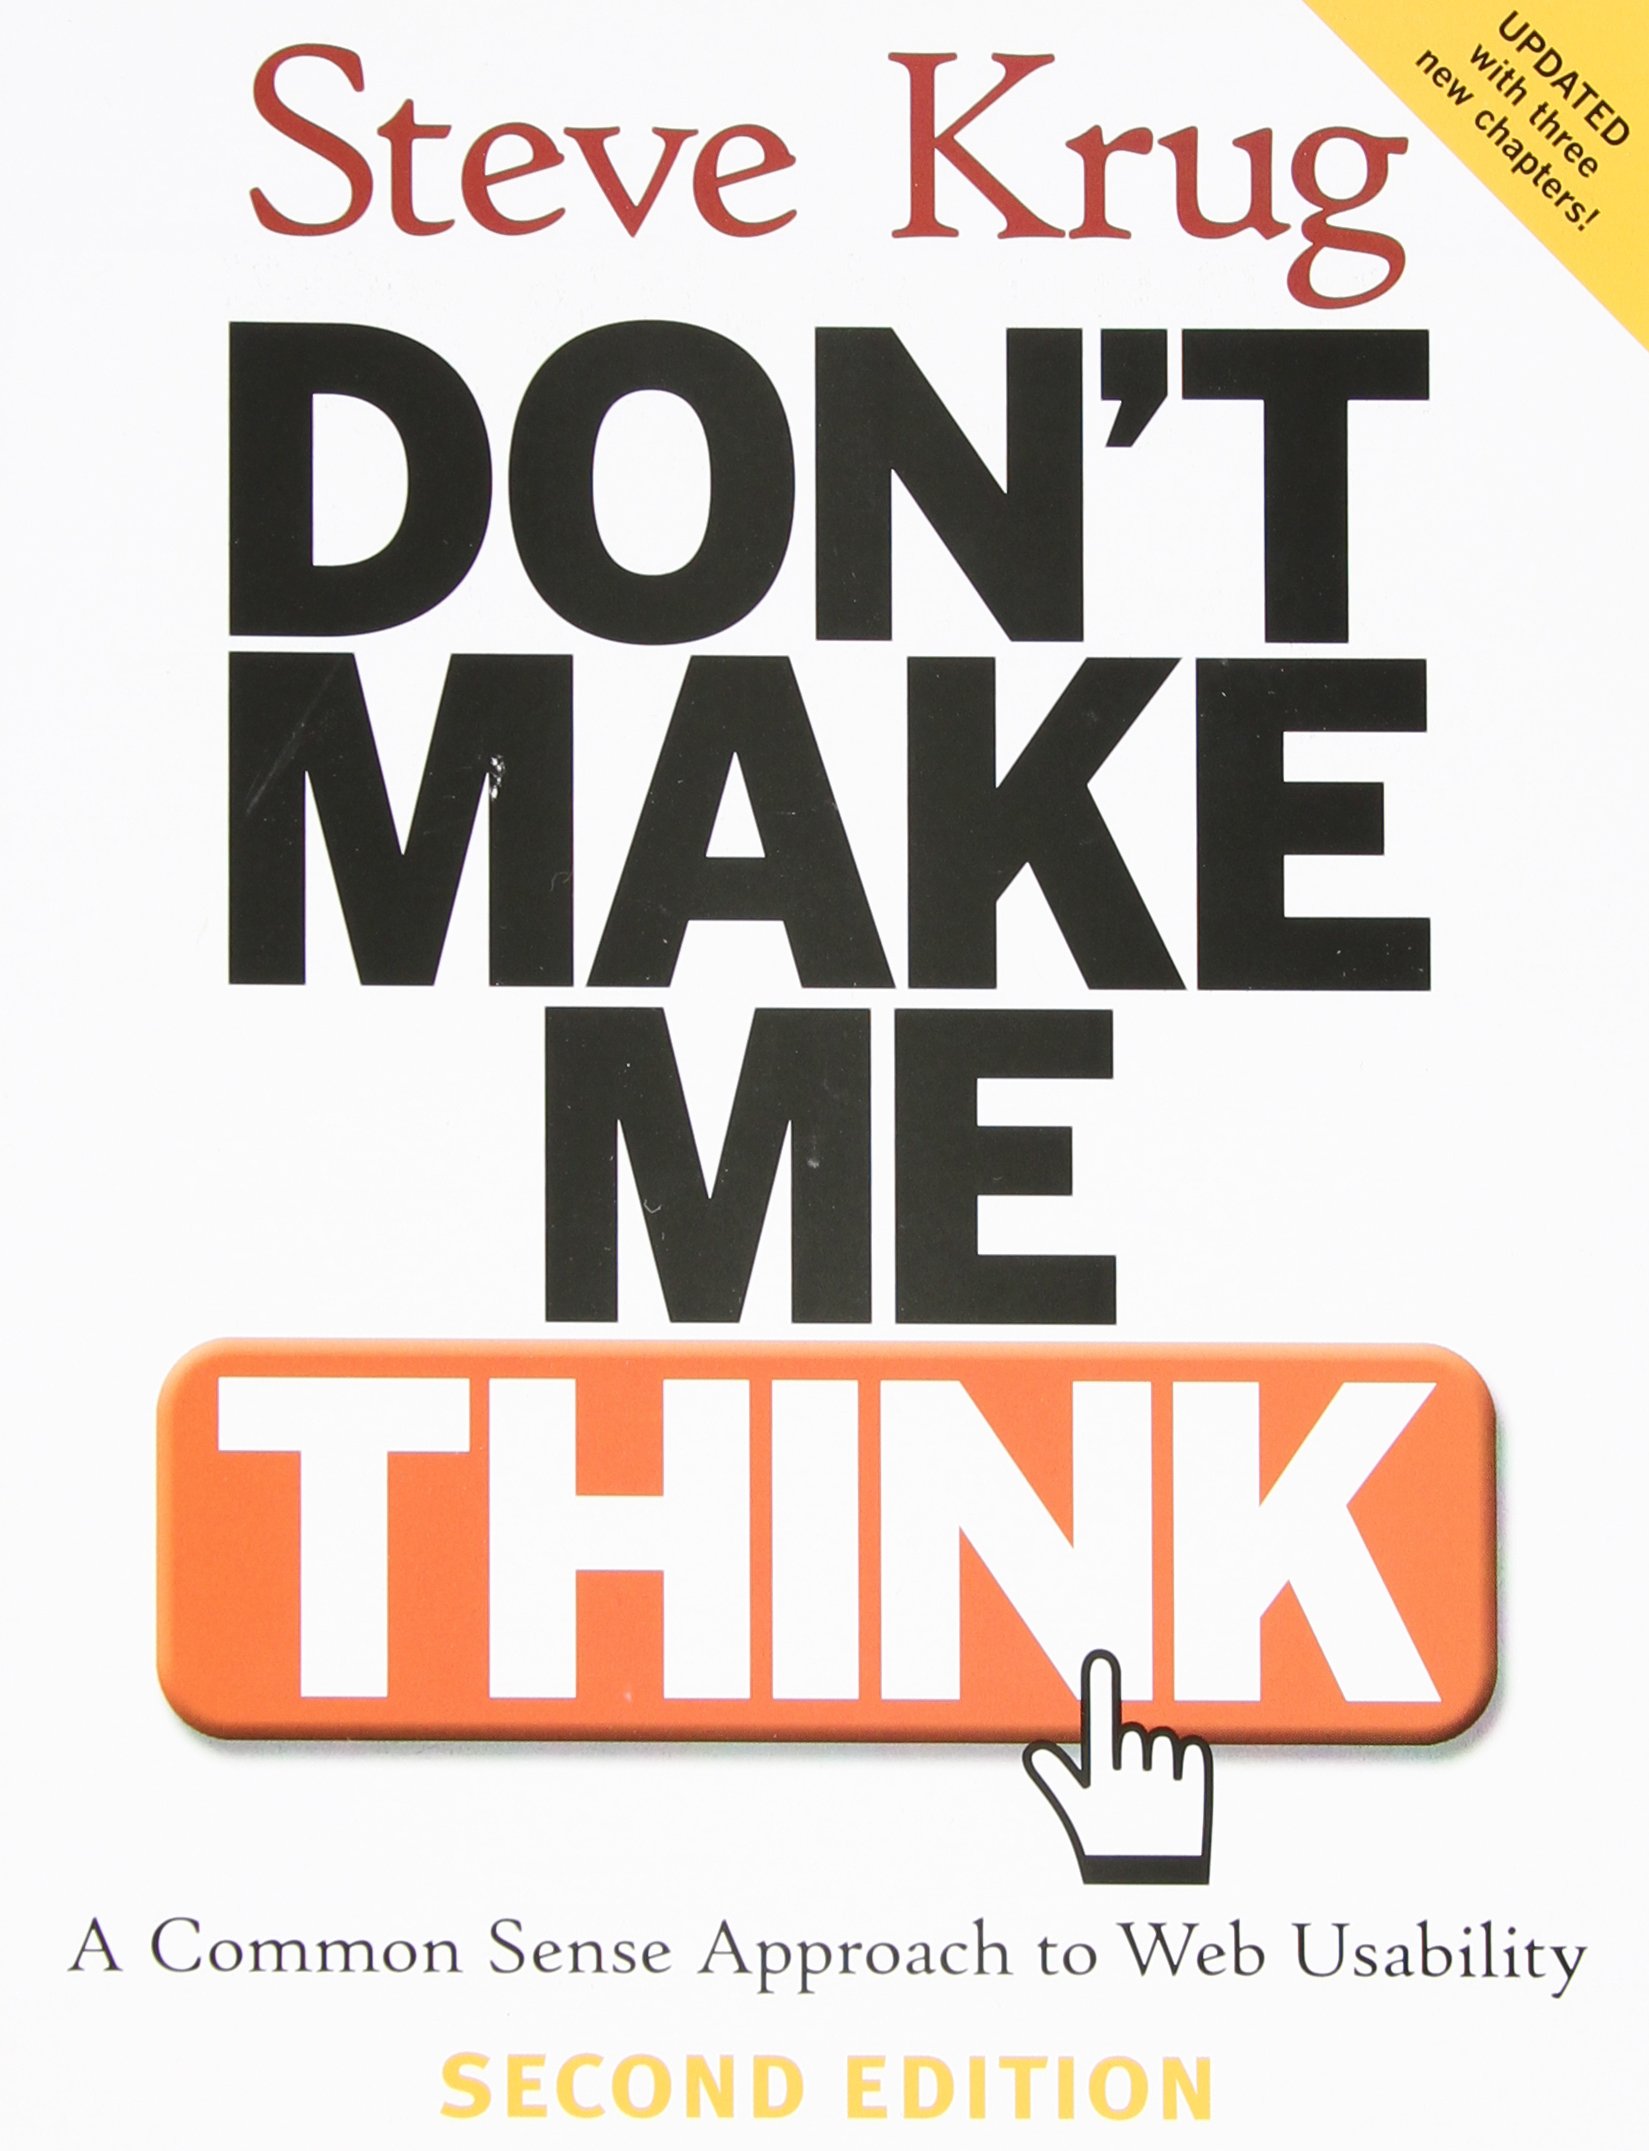 Don't Make Me Think by Steve Krug